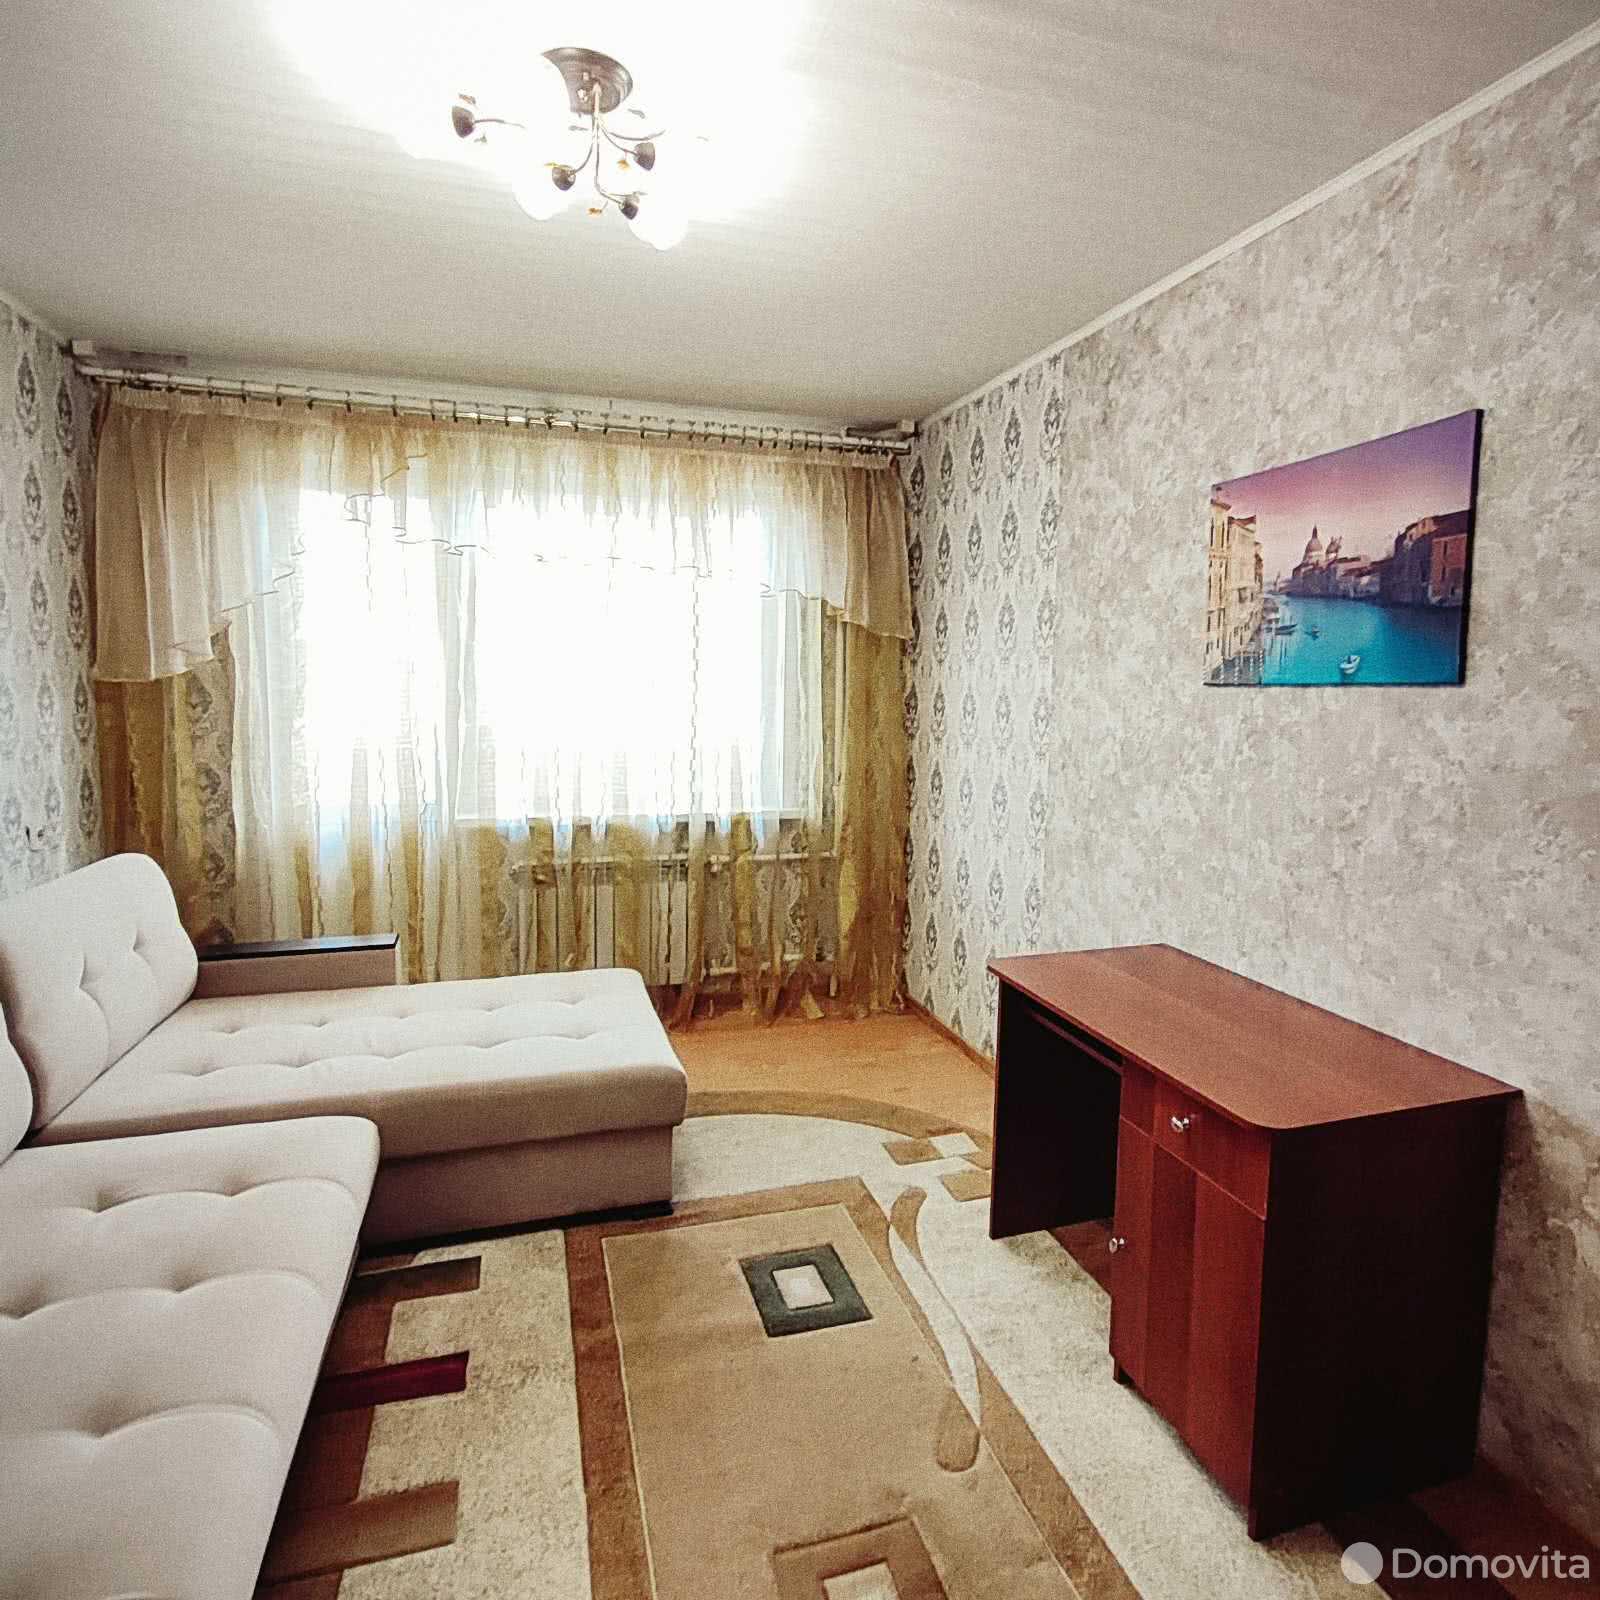 квартира, Минск, ул. Белецкого, д. 2, стоимость аренды 820 р./мес.